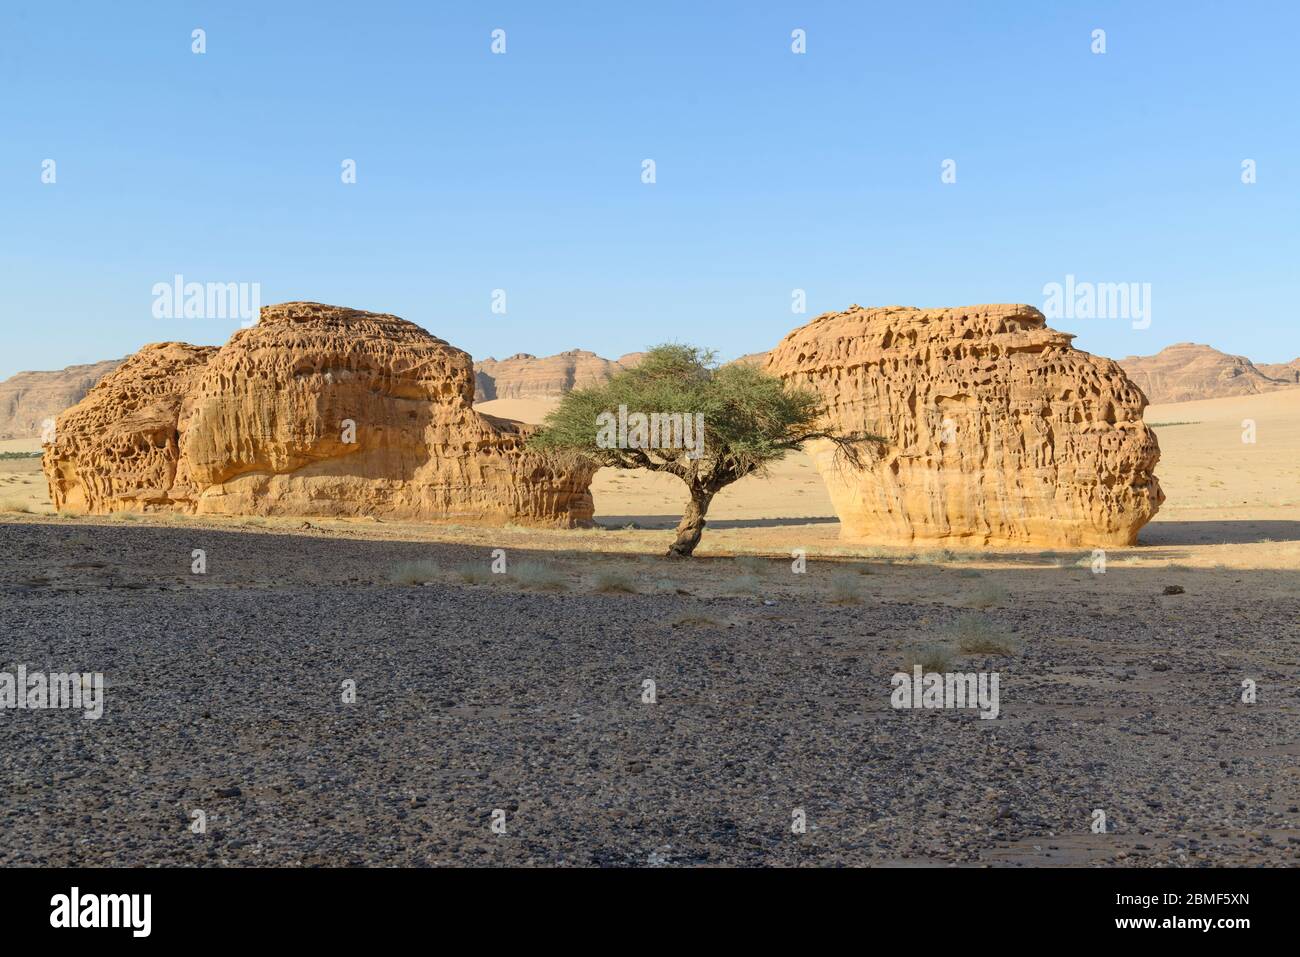 Rock formations in the historic Al-Ula valley, Saudi Arabia Stock Photo